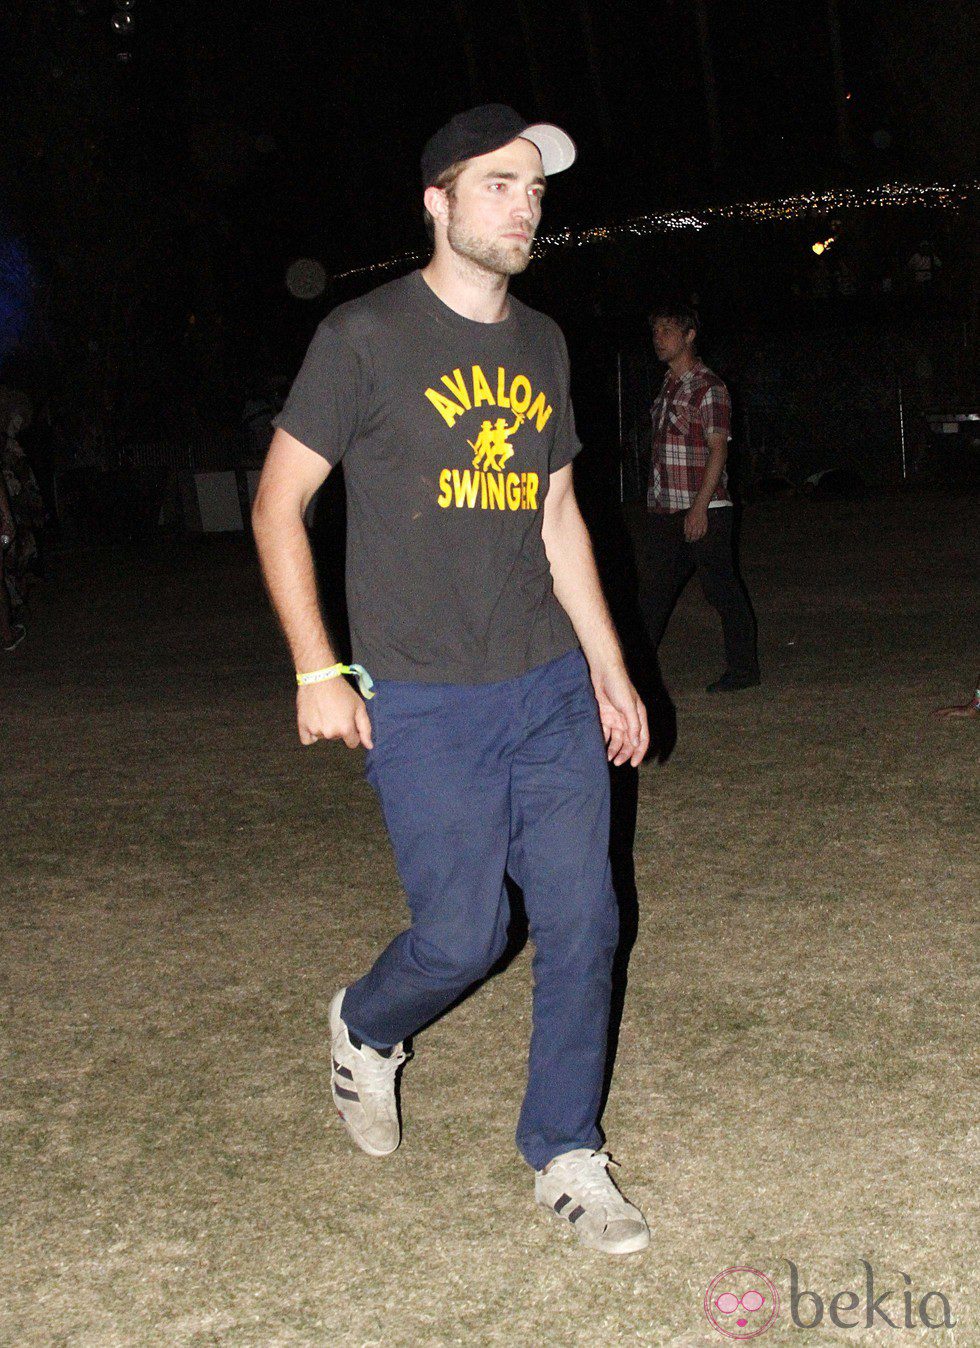 Robert Pattinson en el Festival Coachella